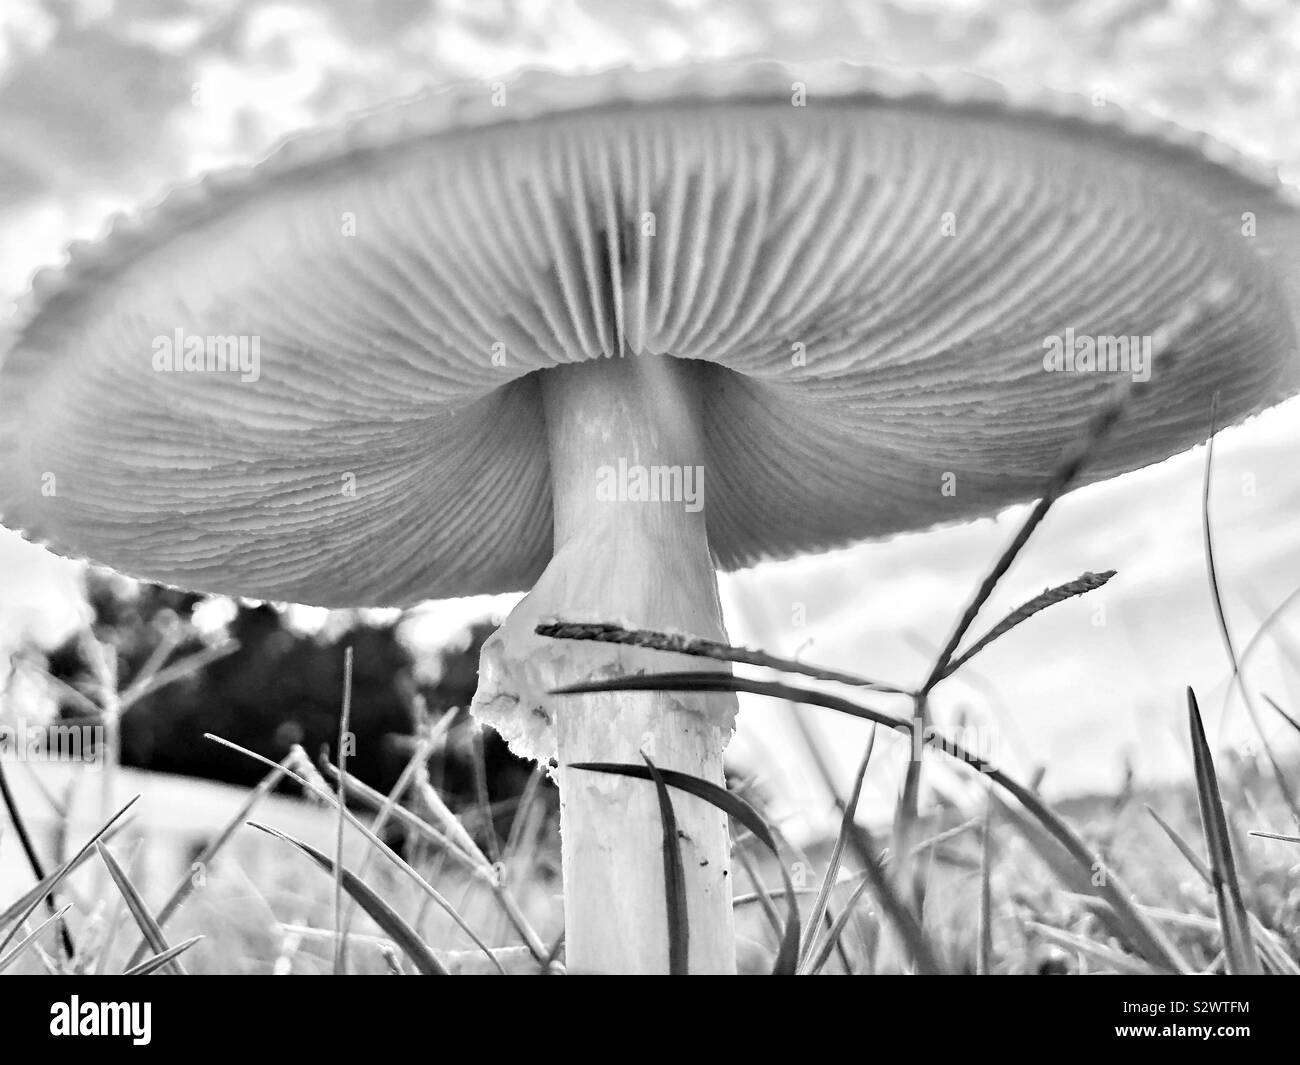 Bugs view underneath a mushroom at dawn Stock Photo